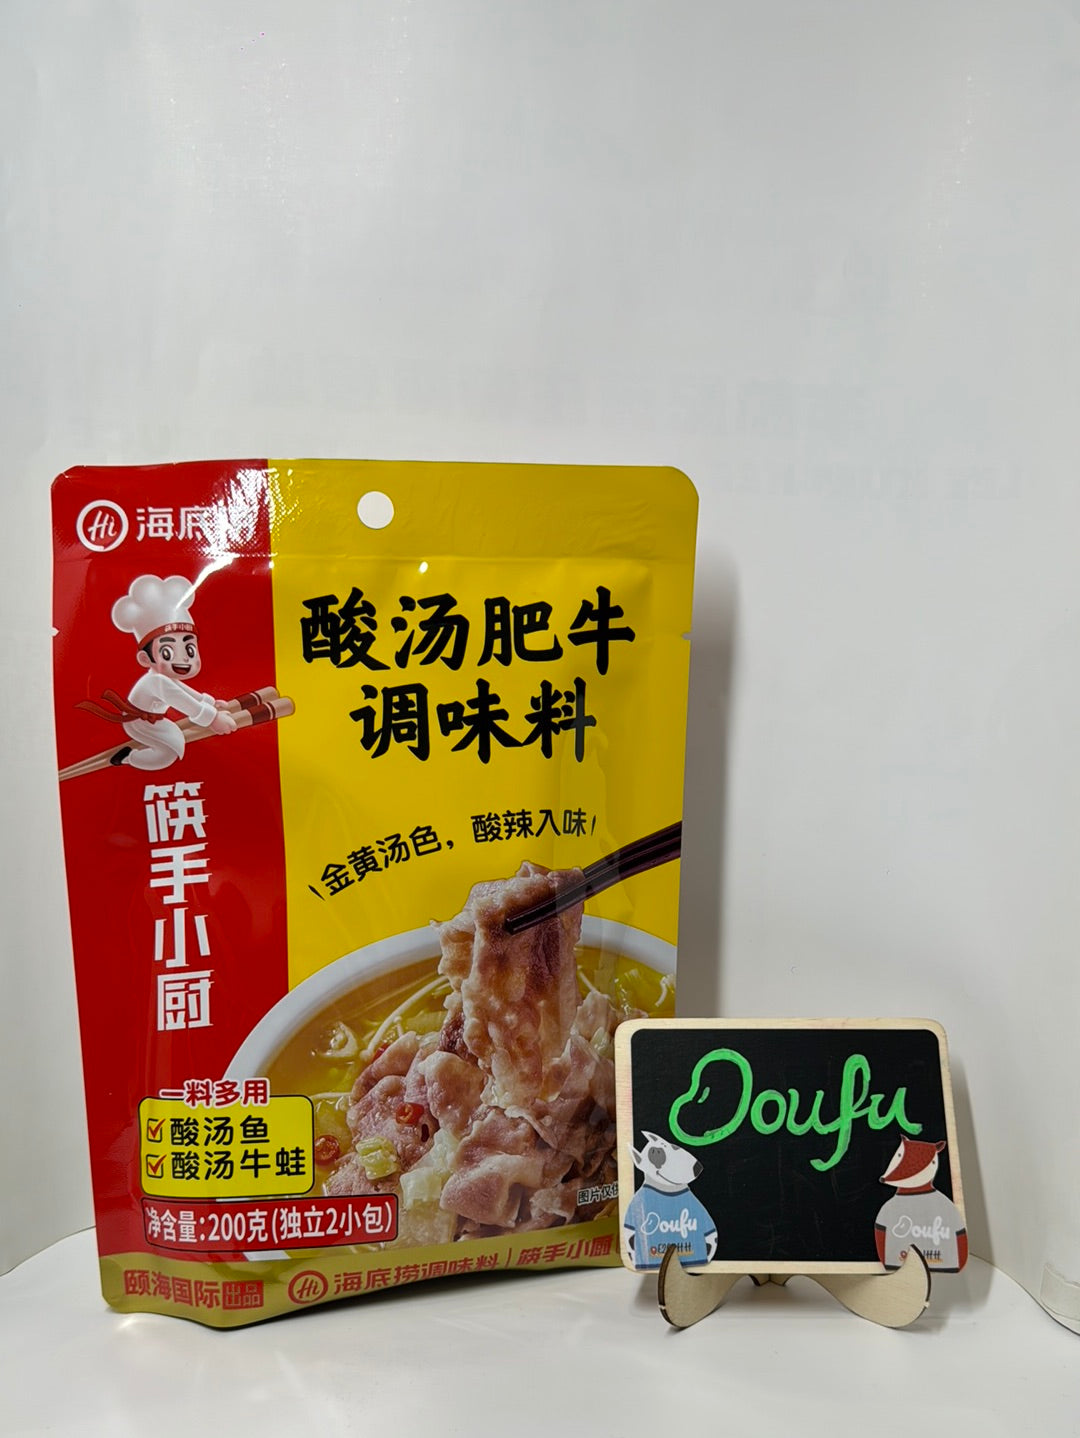 HDL beef sour soup seasoning 海底捞酸汤肥牛调味料 200g